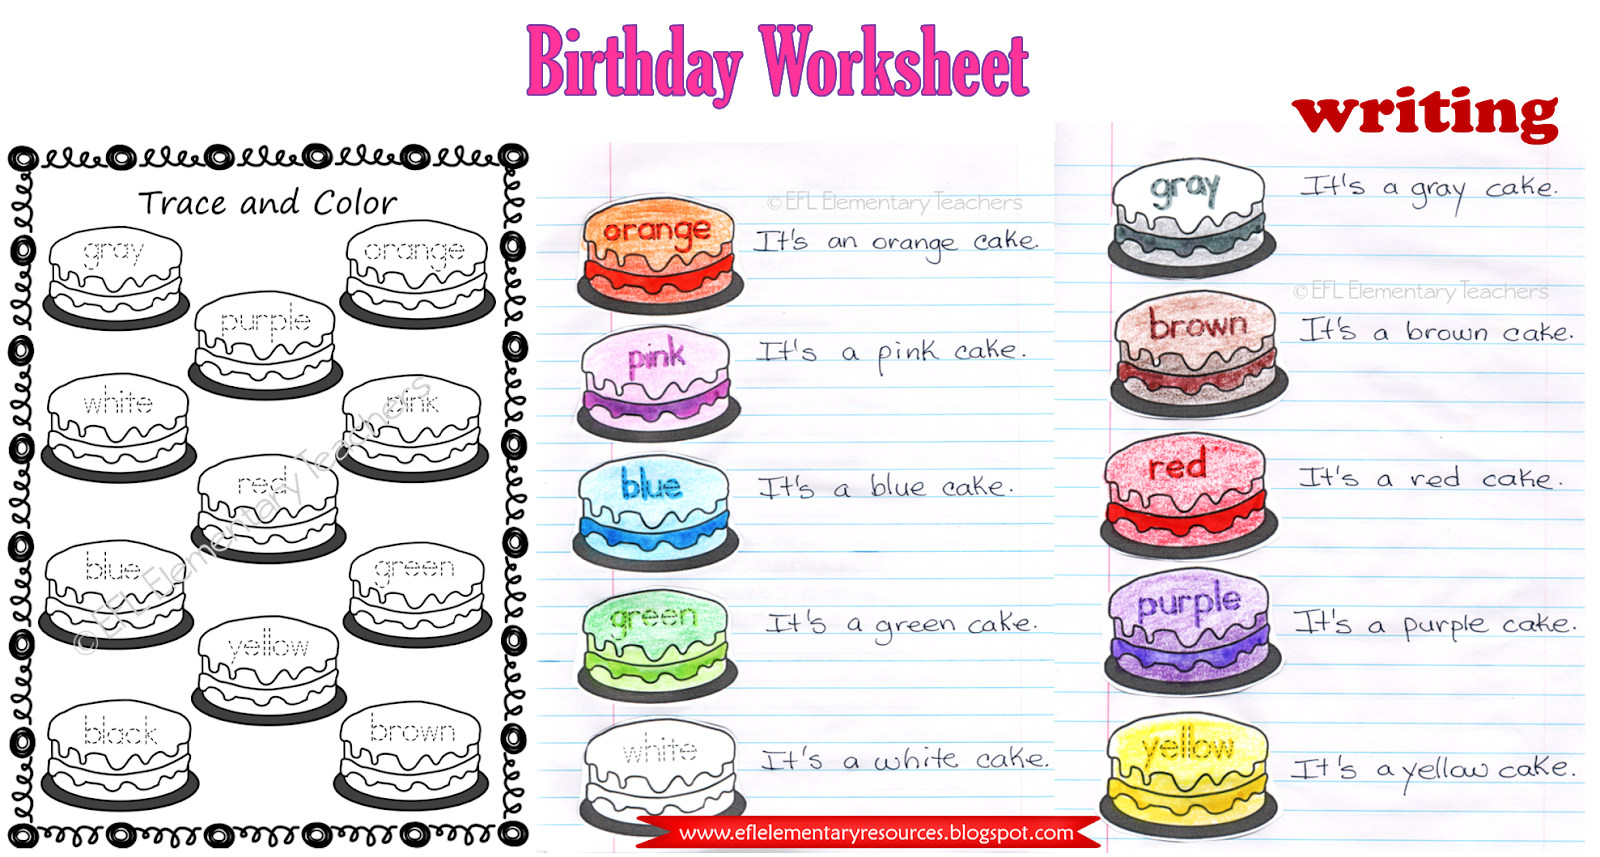 efl-elementary-teachers-birthday-unit-worksheets-part-3